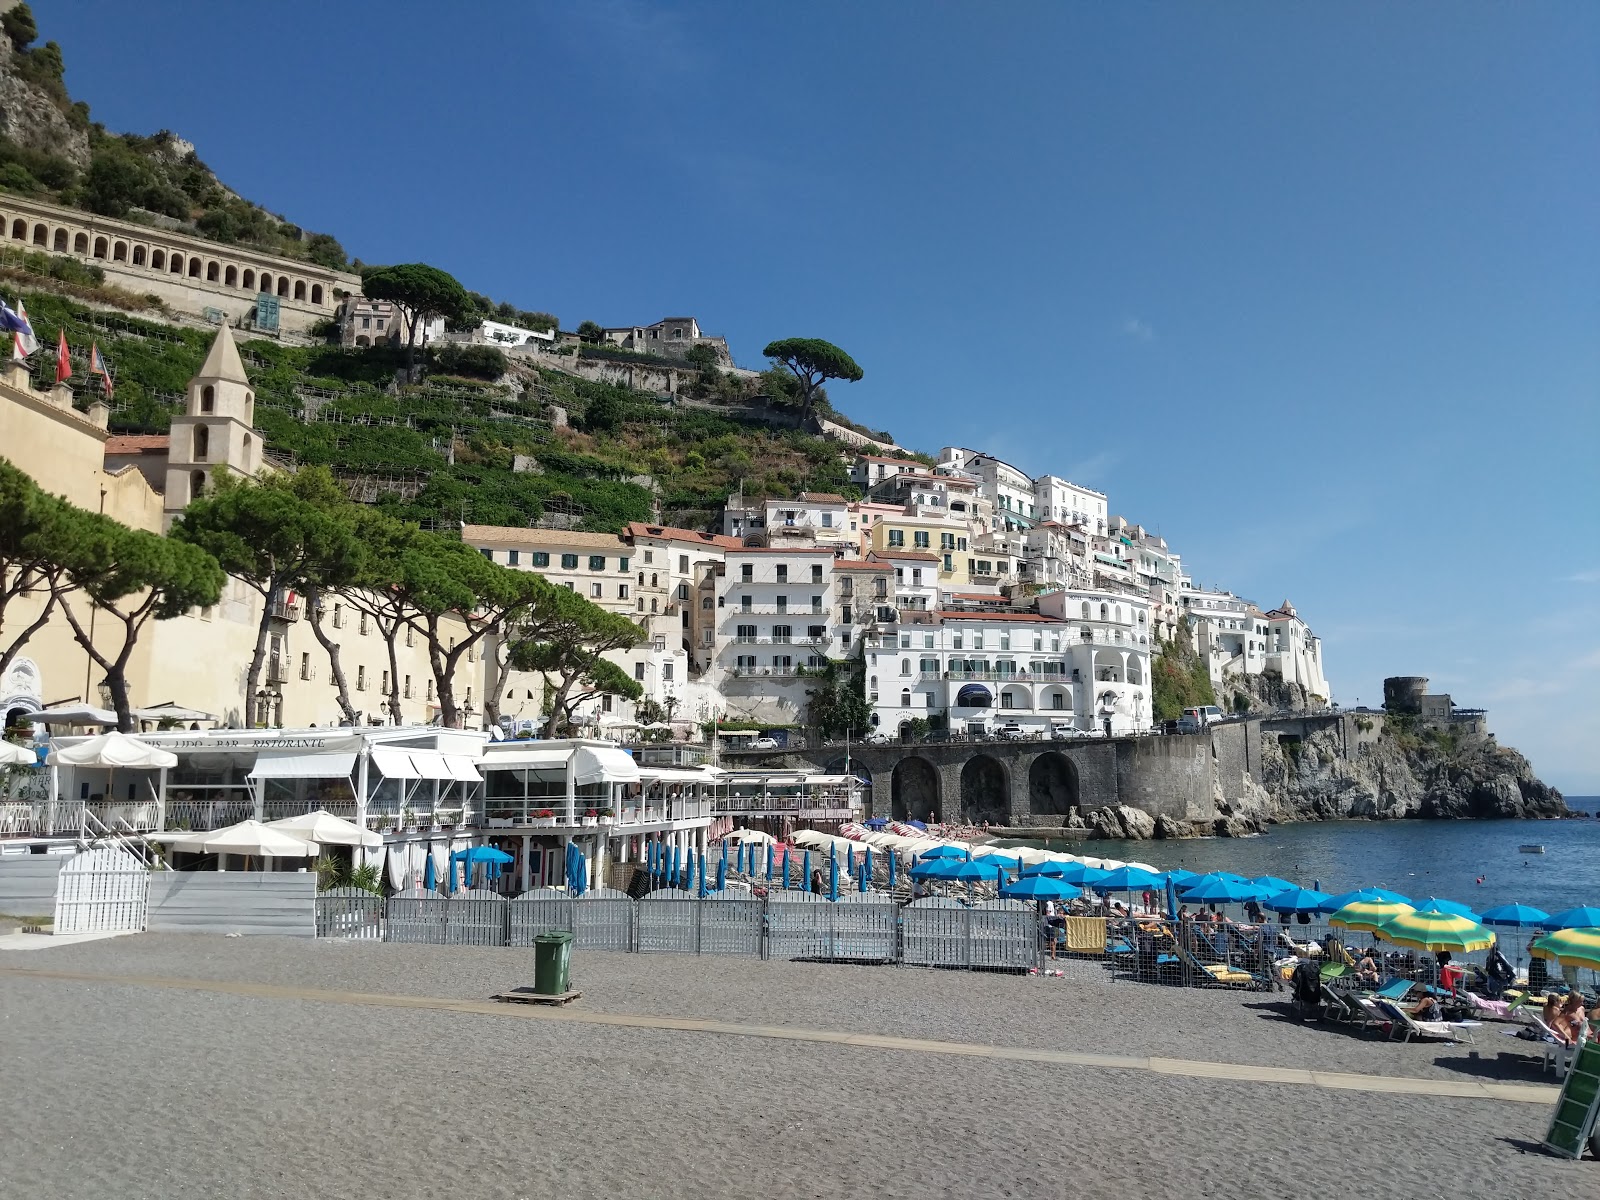 Fotografija Amalfi beach in naselje